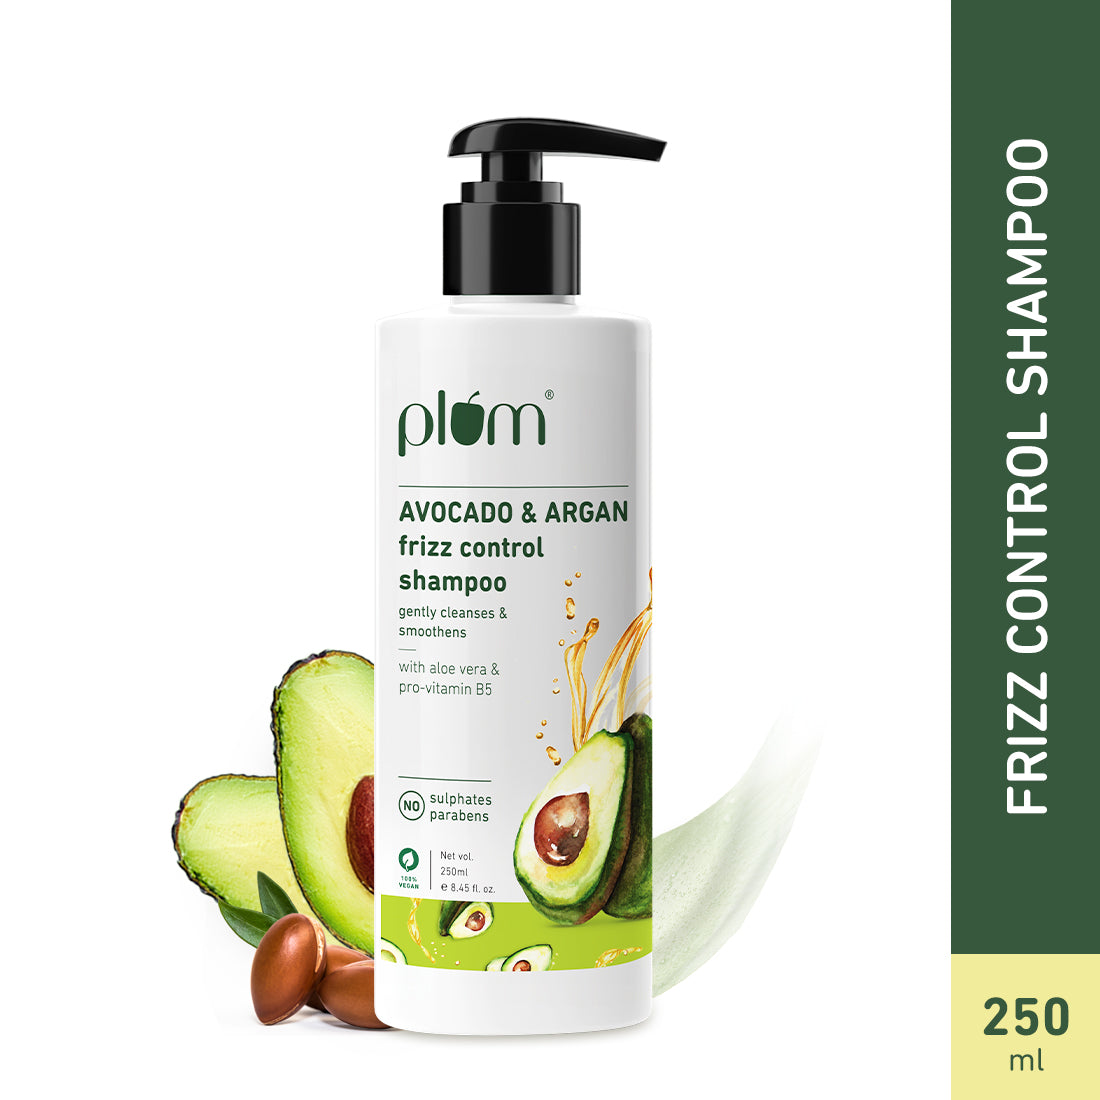 Avocado & Argan Frizz Control Shampoo